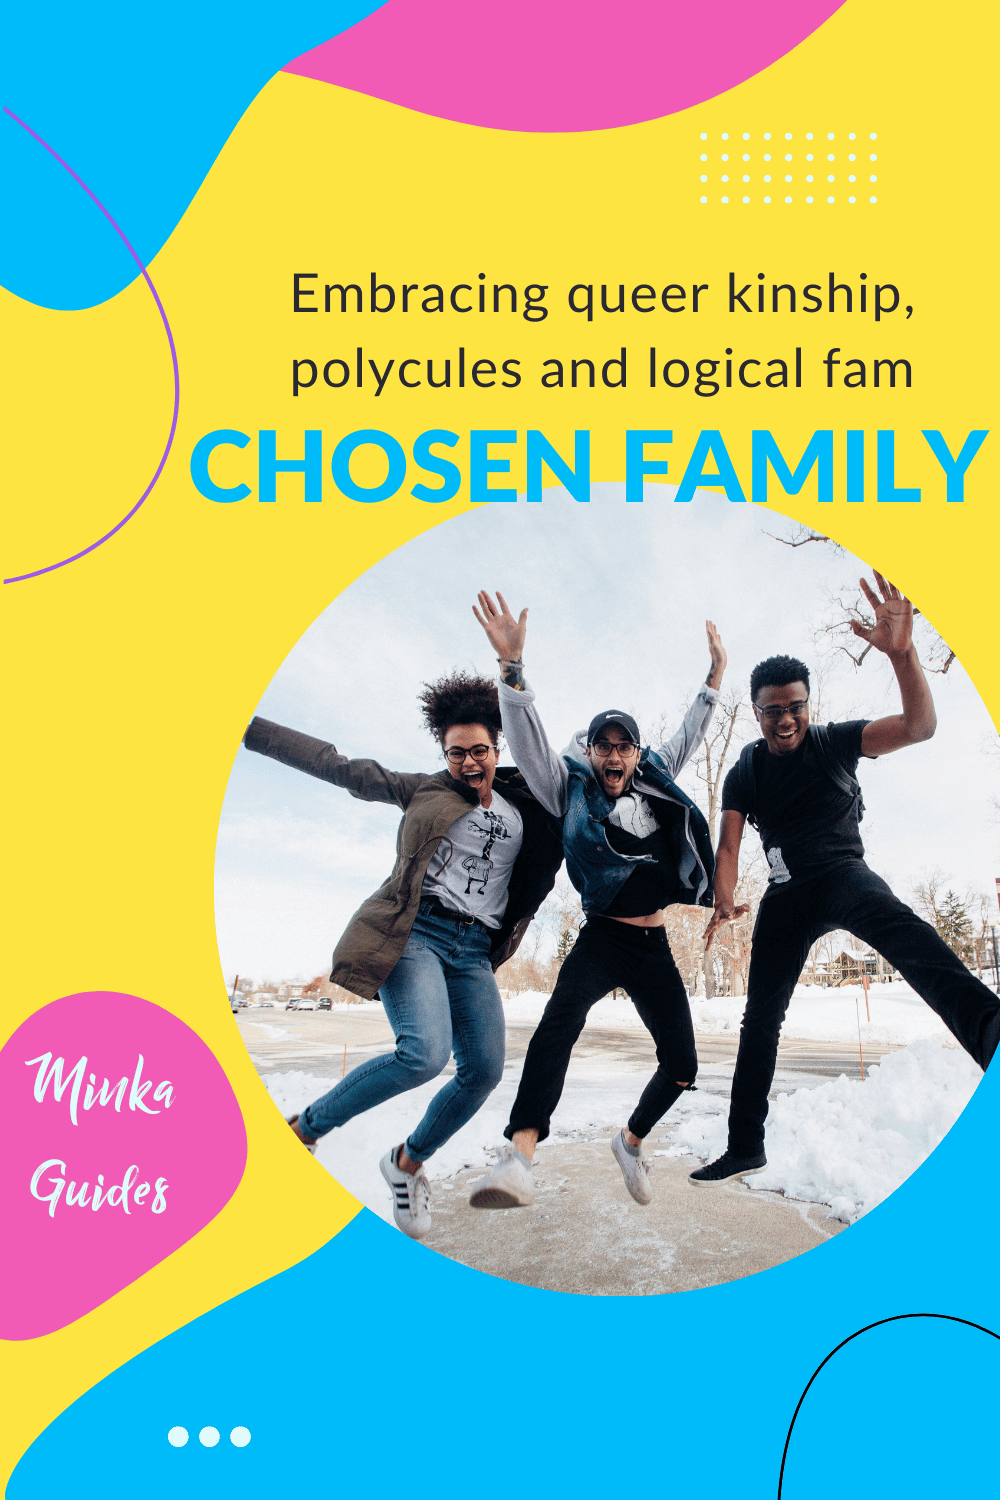 Chosen family | Minka Guides